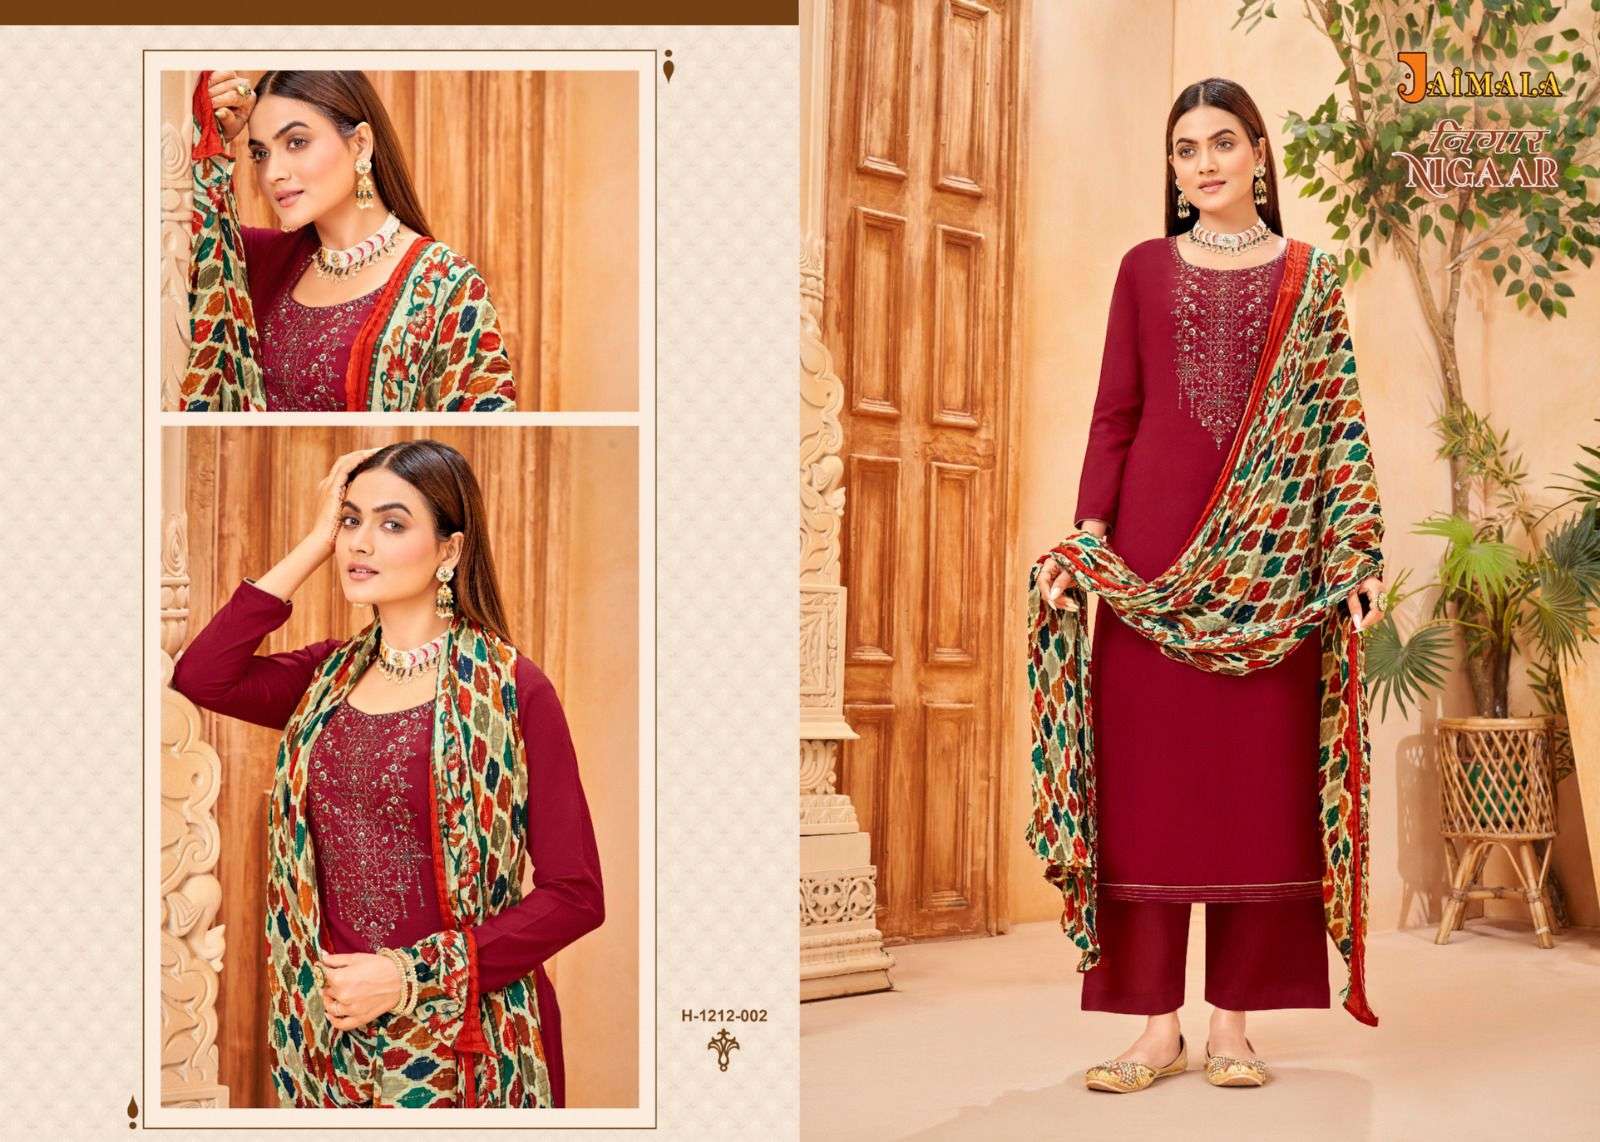 jaimala nigaar stylish designer salwar kameez catalogue manufacturer surat